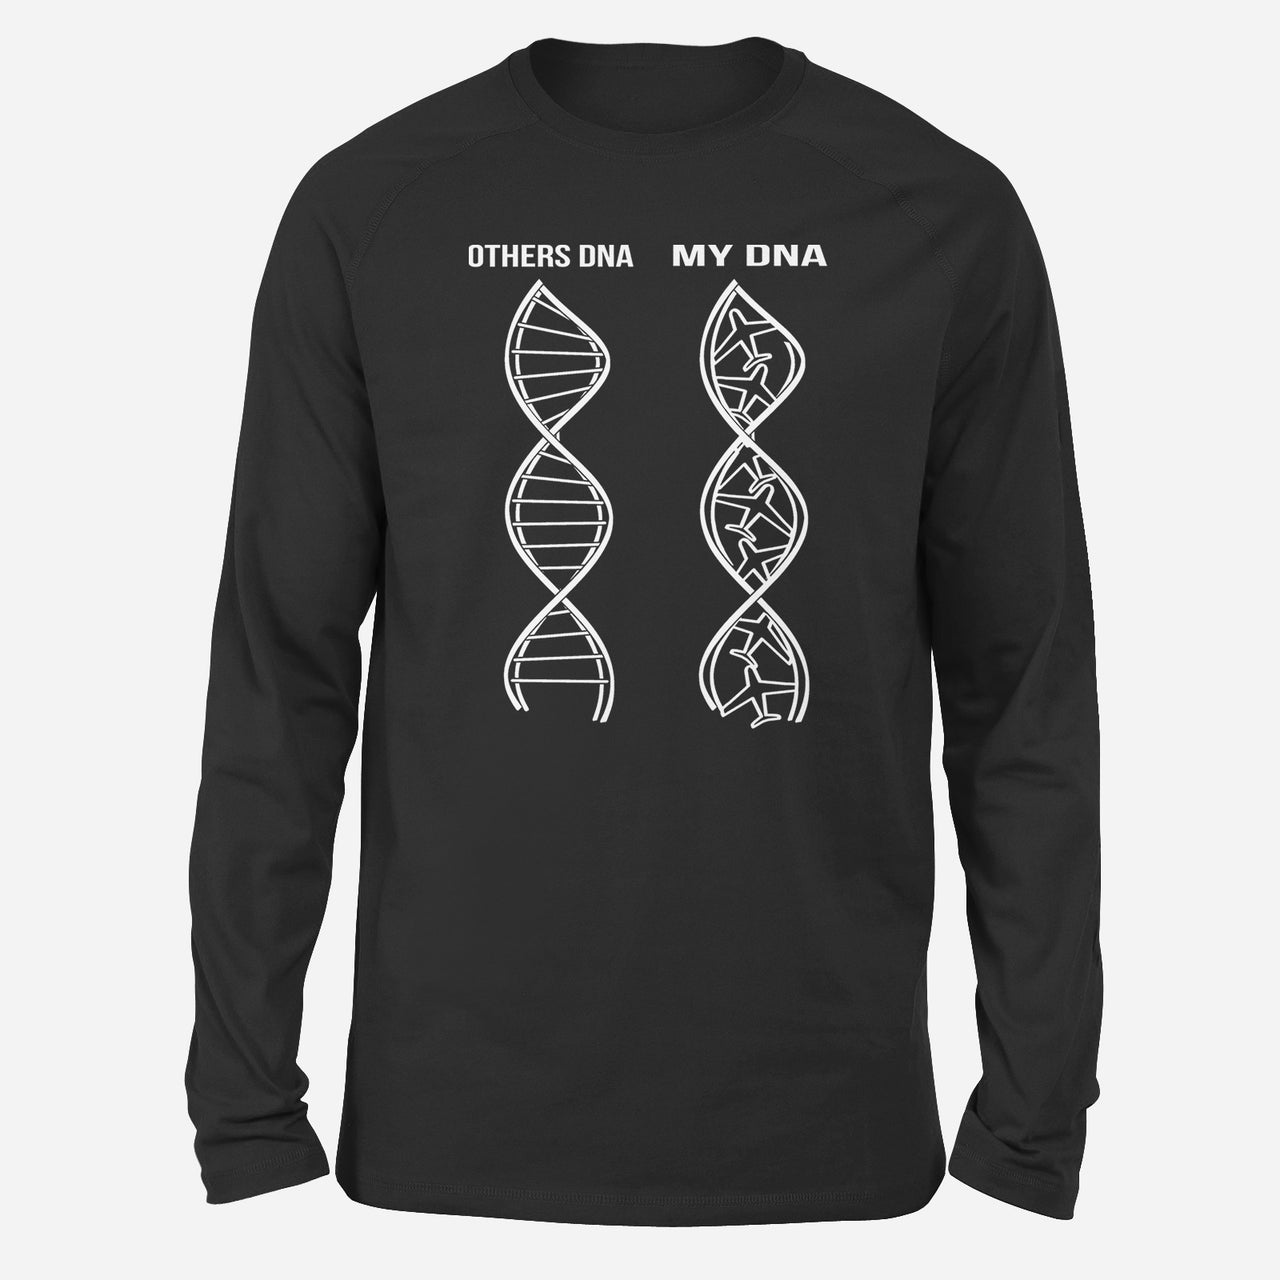 Aviation DNA Designed Long-Sleeve T-Shirts